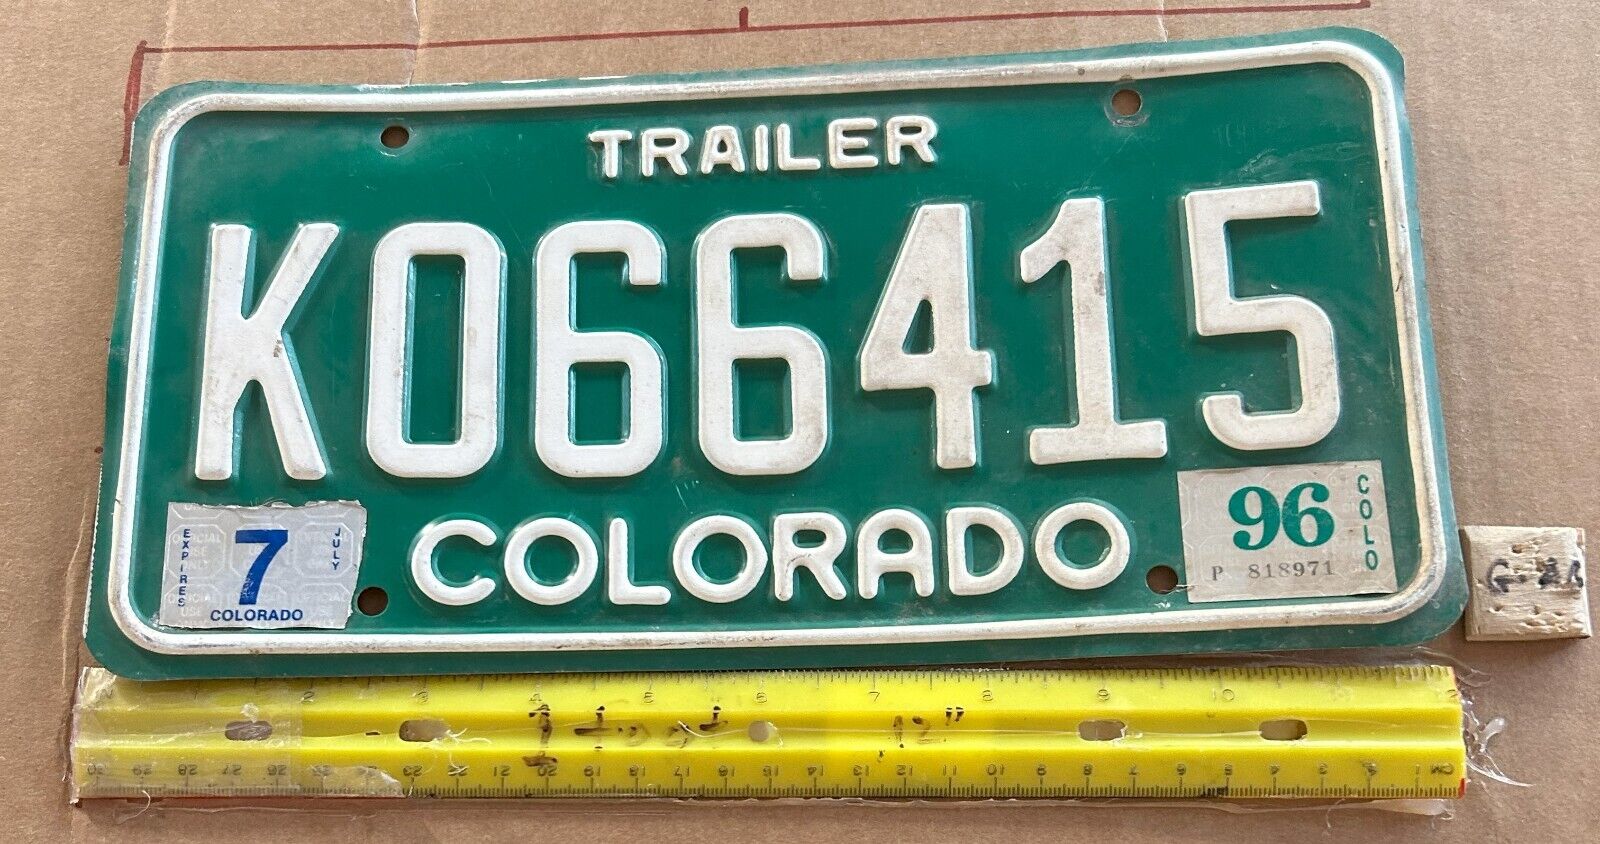 *License Plate, Colorado, Trailer, K 066415